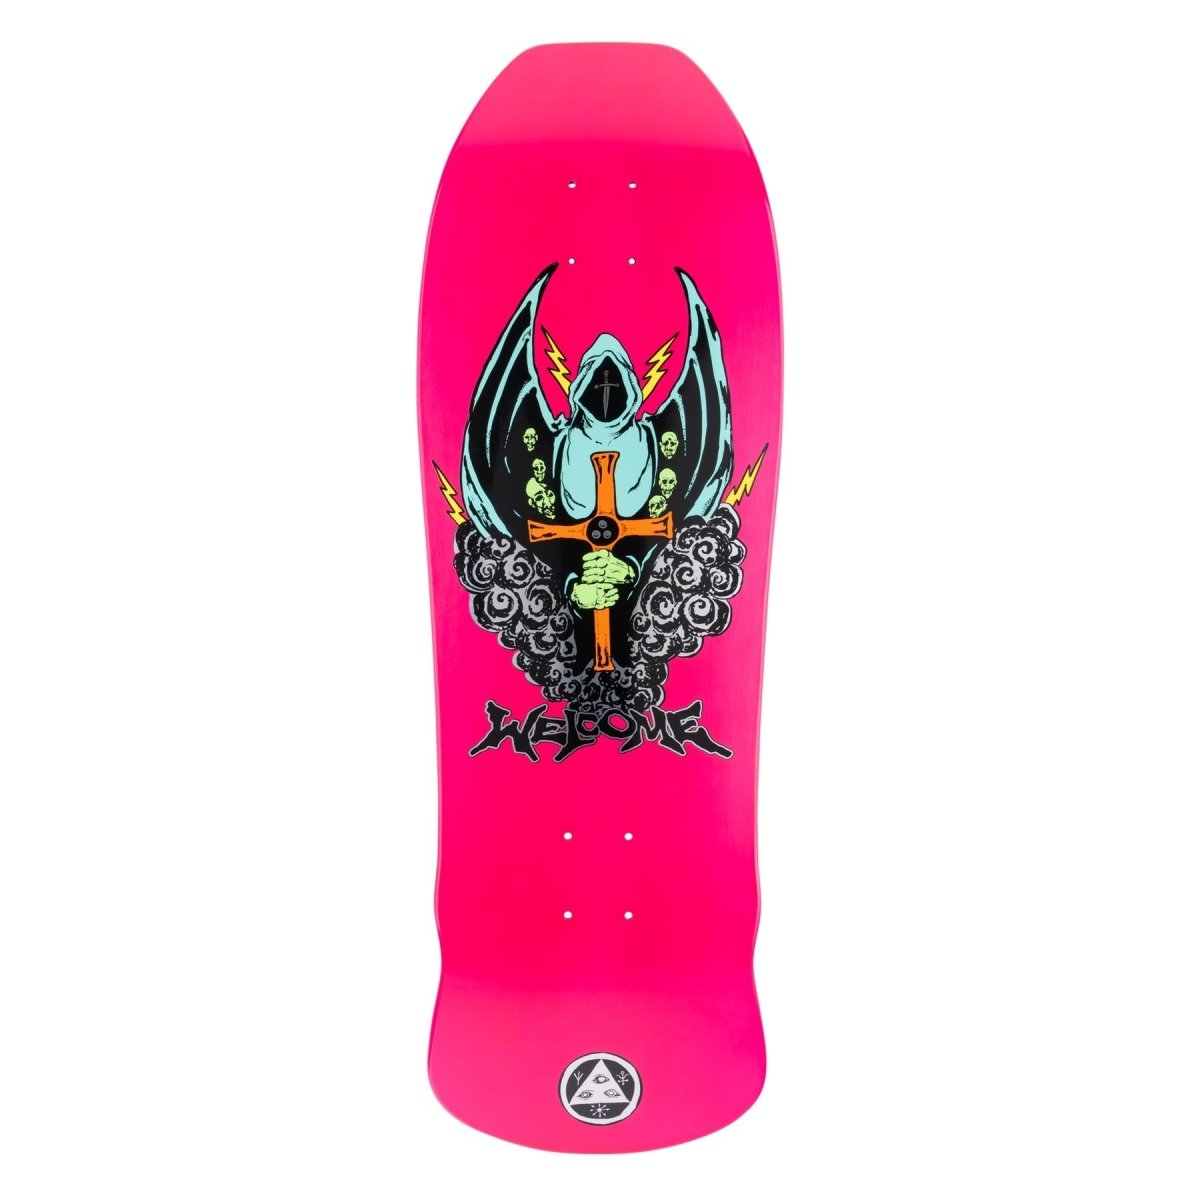 WLCM Knight on Early Grab 10" Neon Pink Dip - Skateboard - Decks